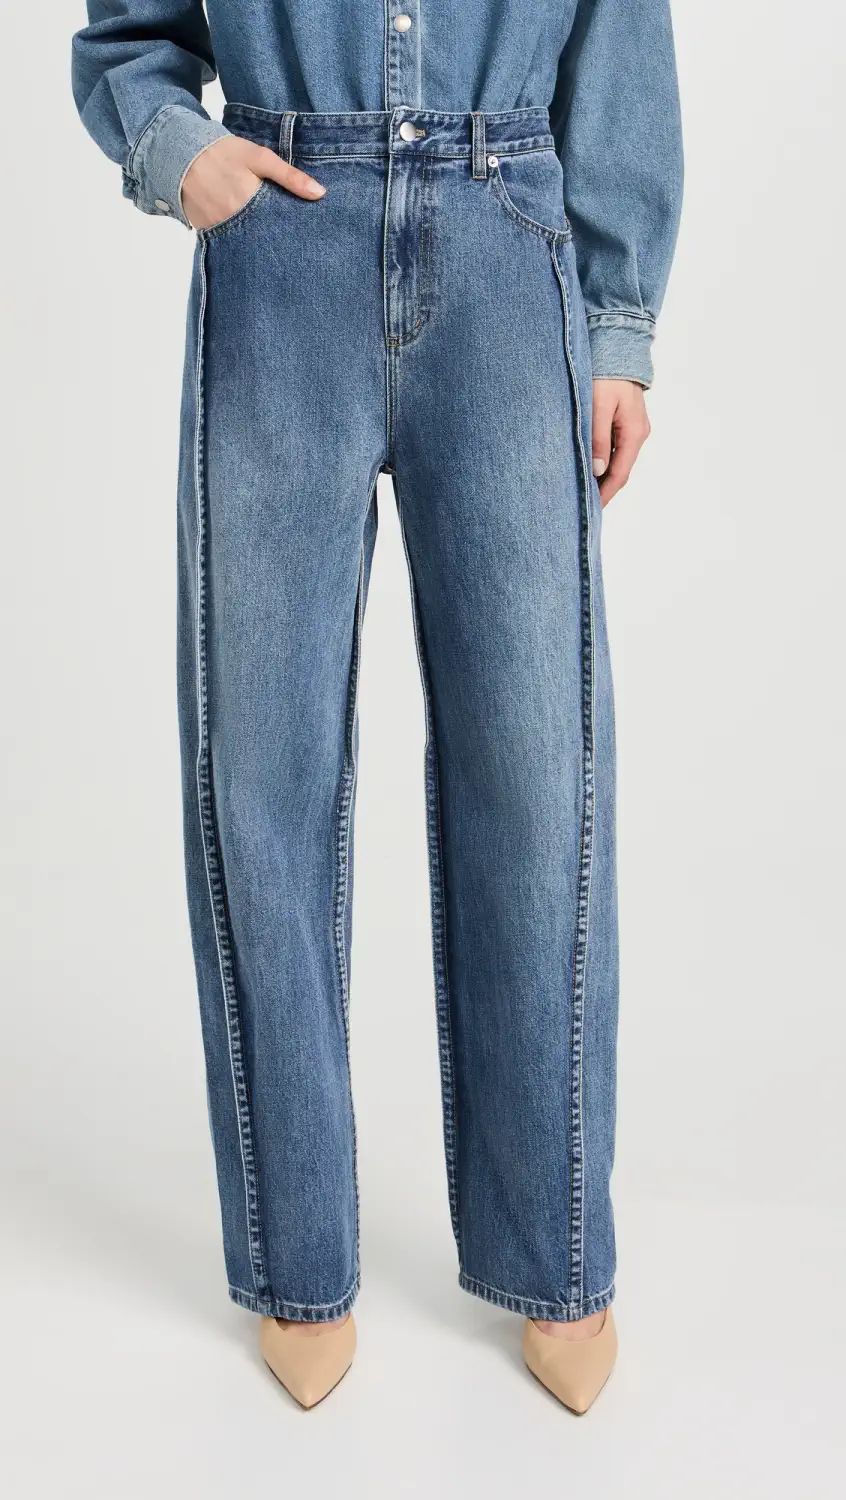 Tibi tuck Jeans | Shopbop